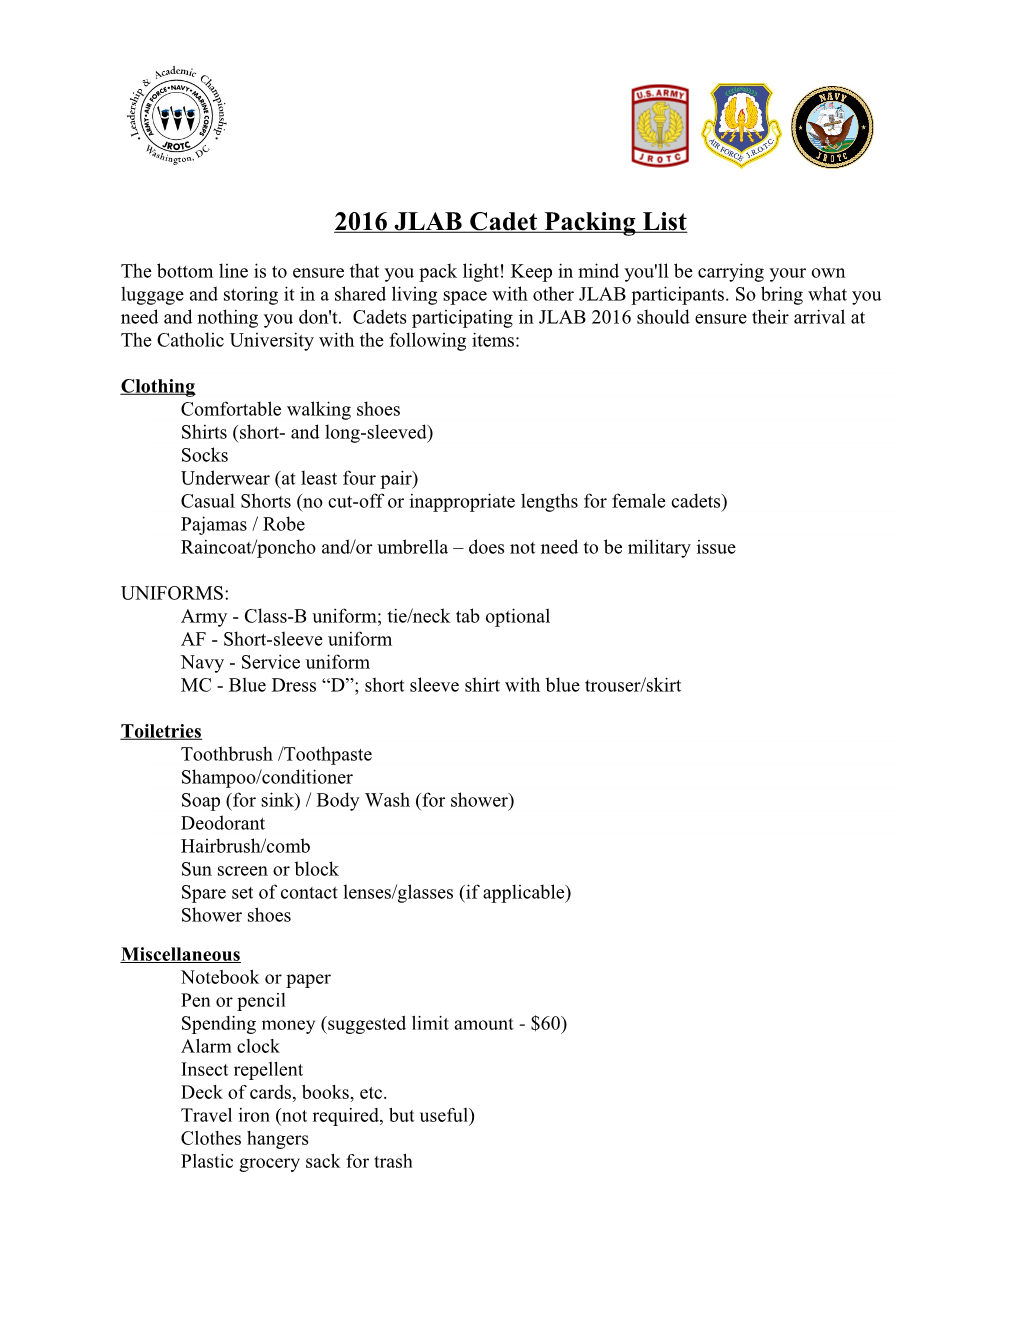 2016JLAB Cadet Packing List